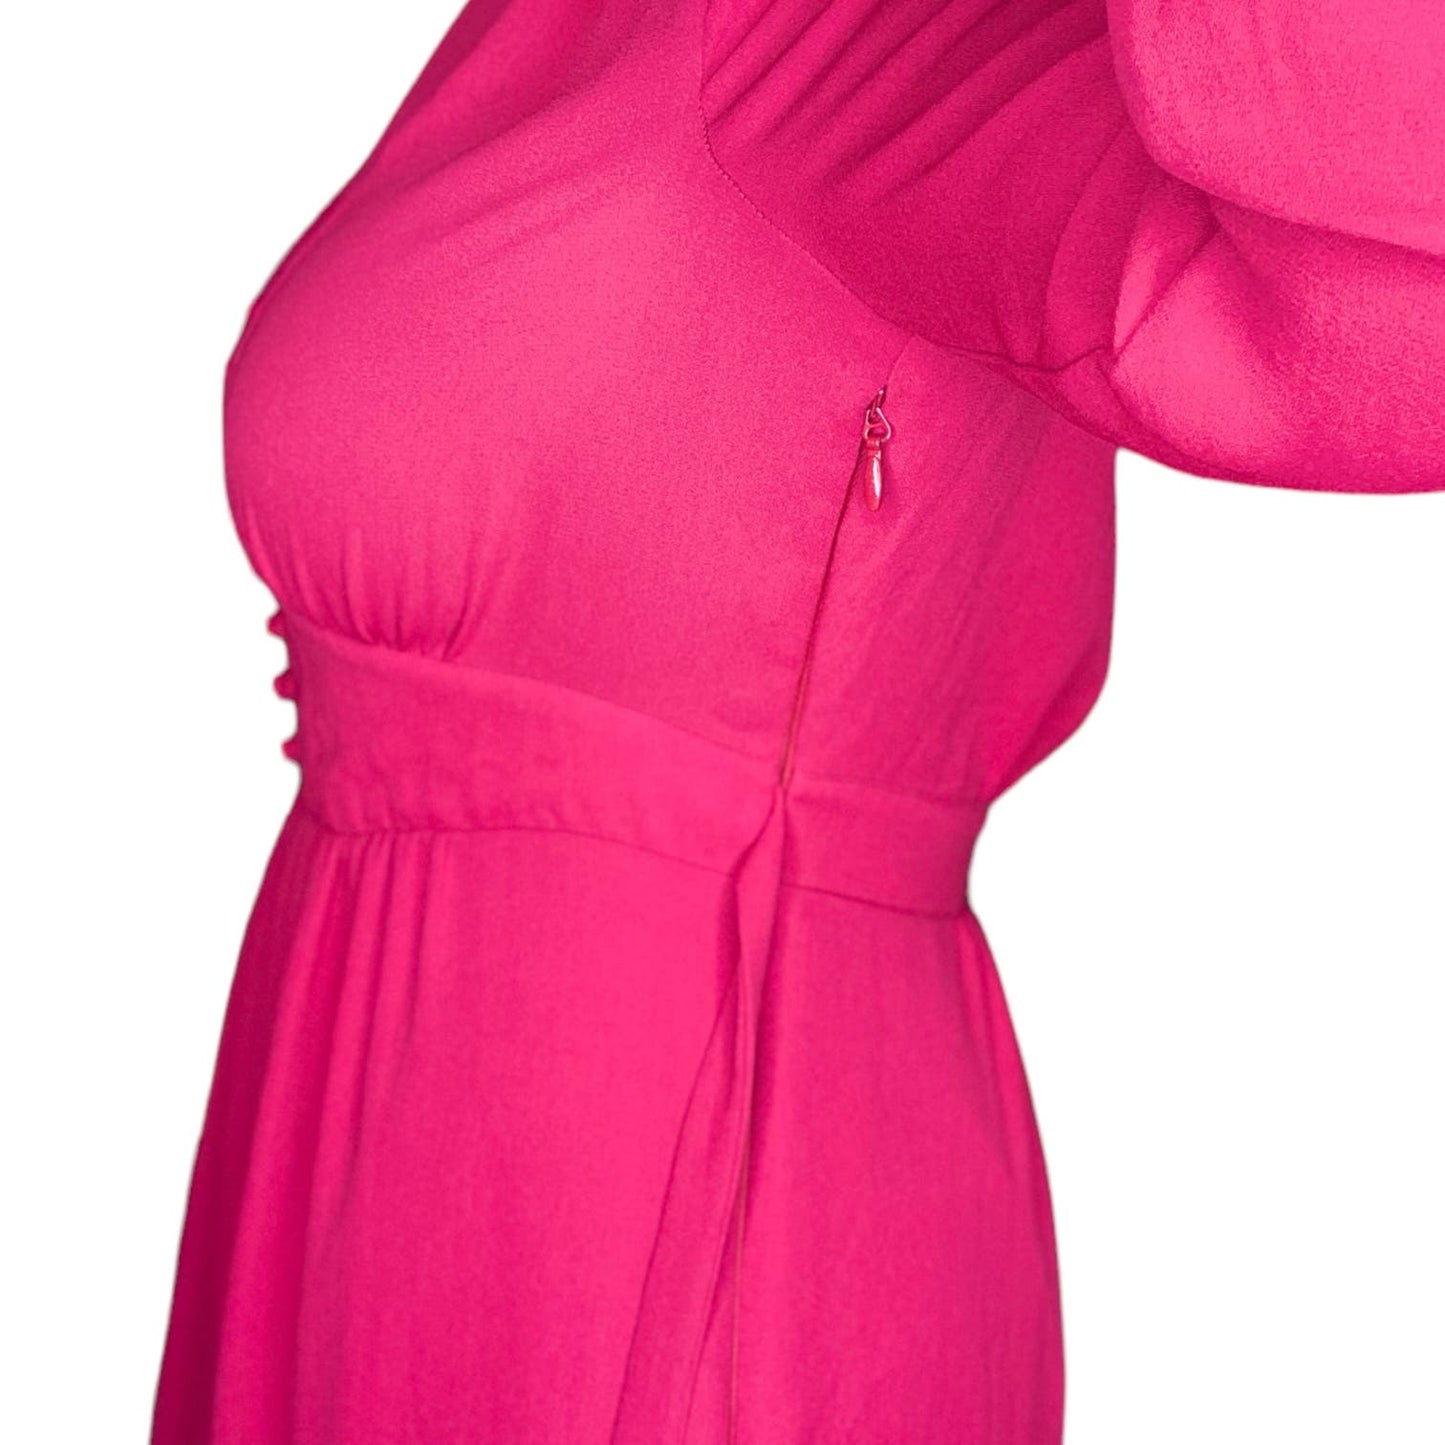 40's Vintage Style Pink Long Sleeve Dress size Large